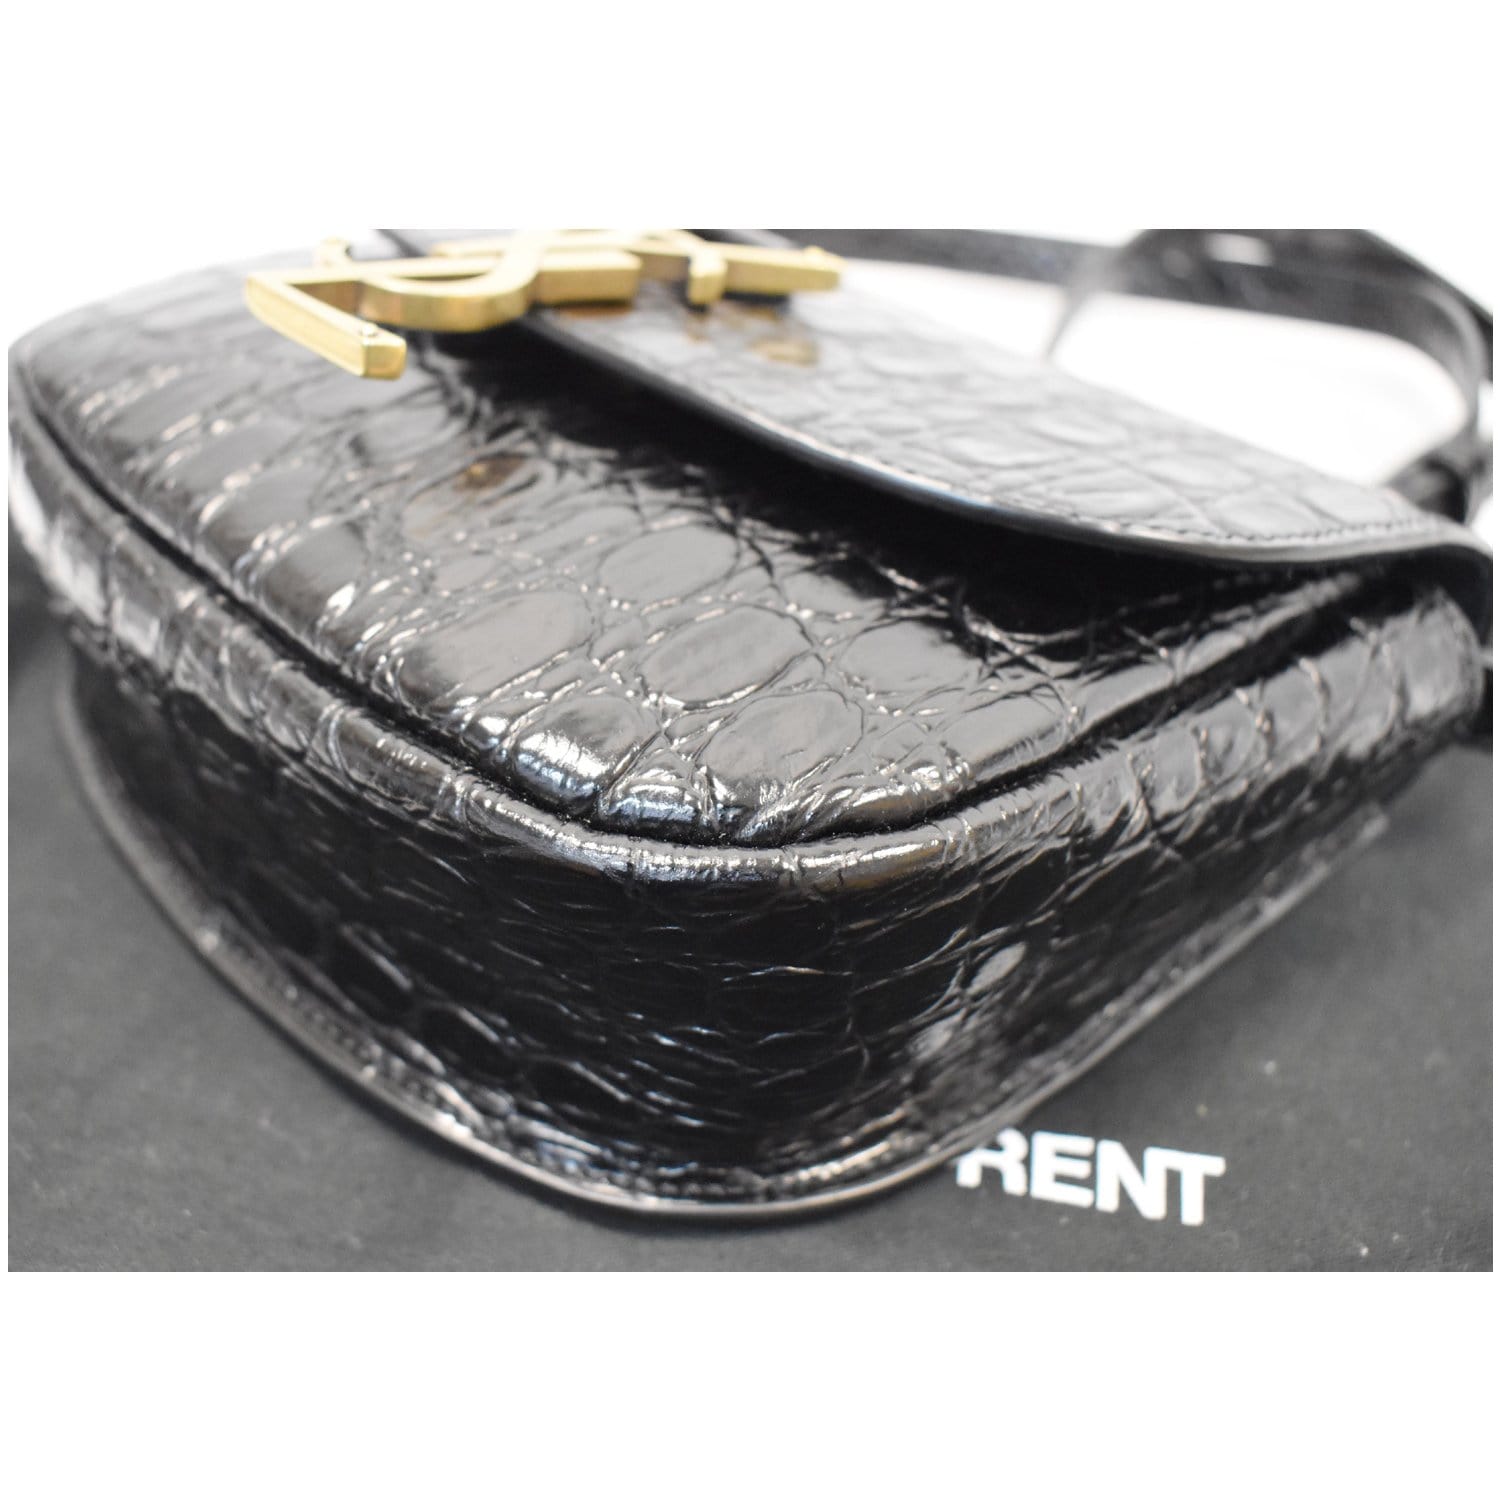 Saint Laurent Kaia Mini Leather Shoulder Bag in Black